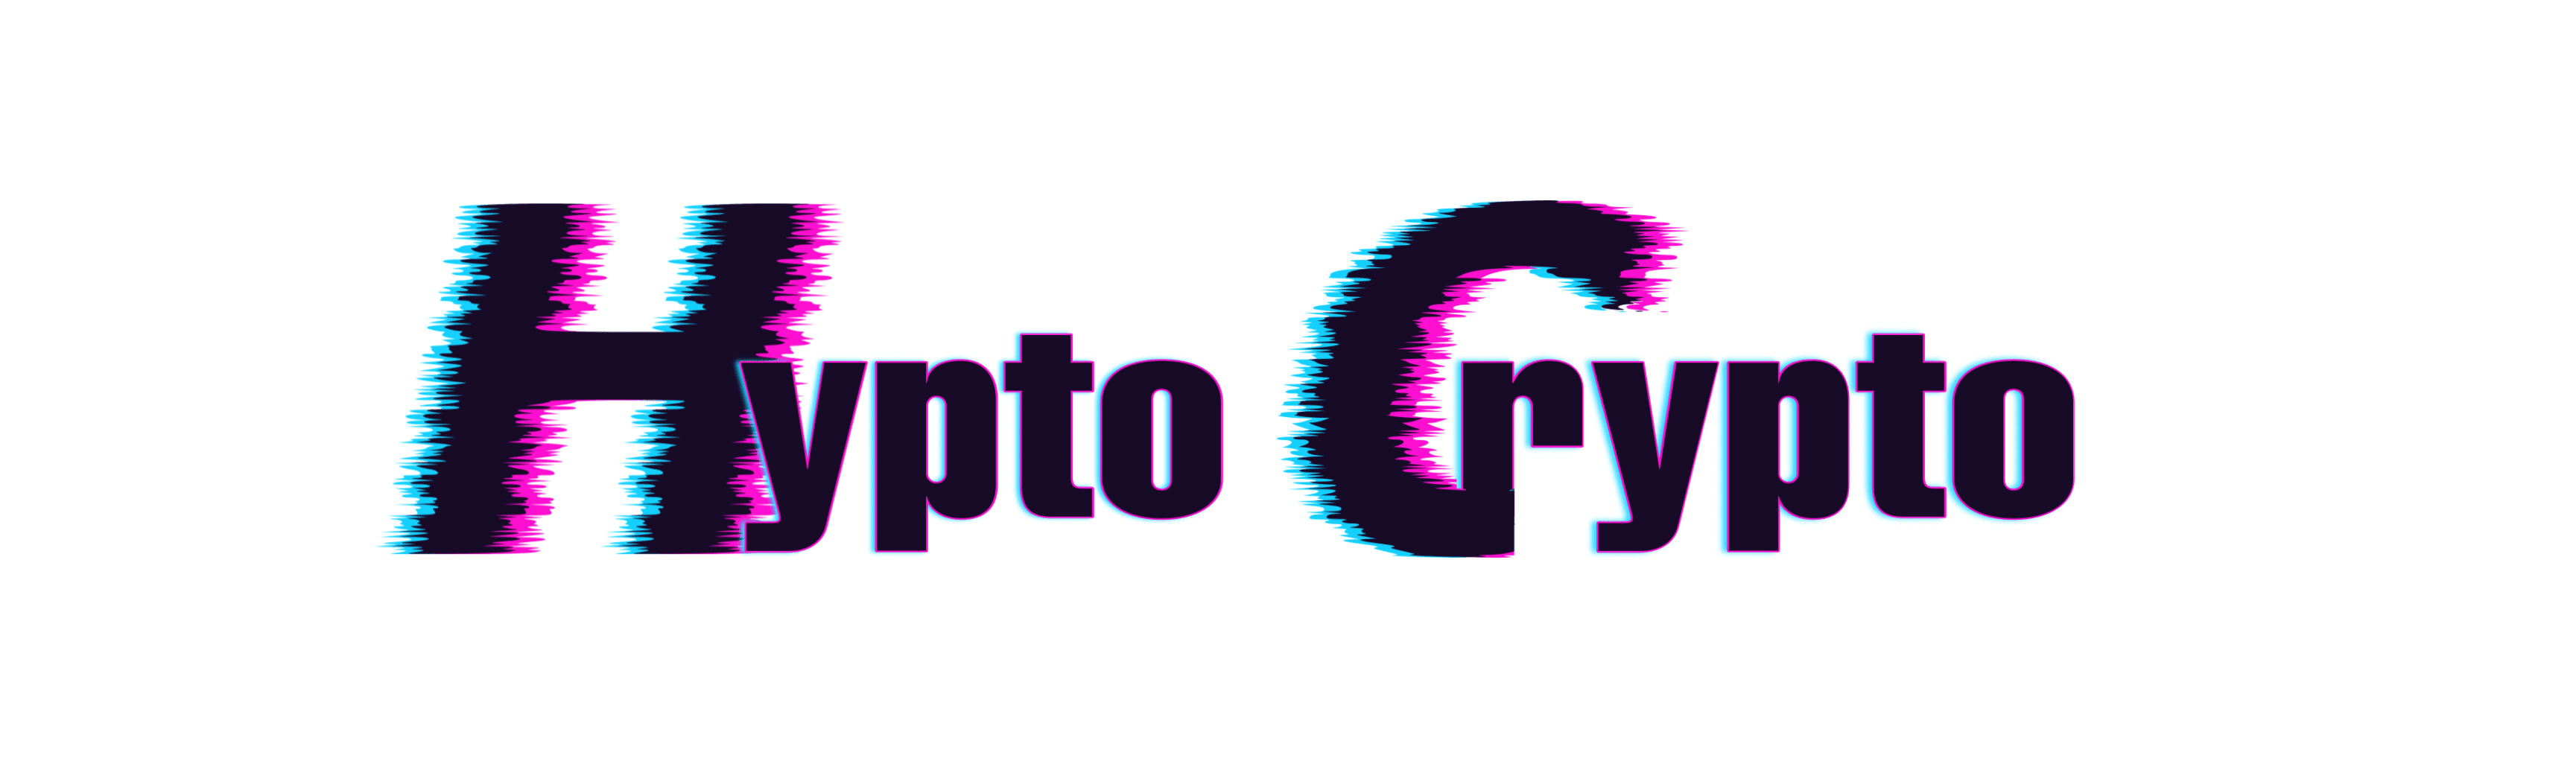 HyptoCrypto 橫幅